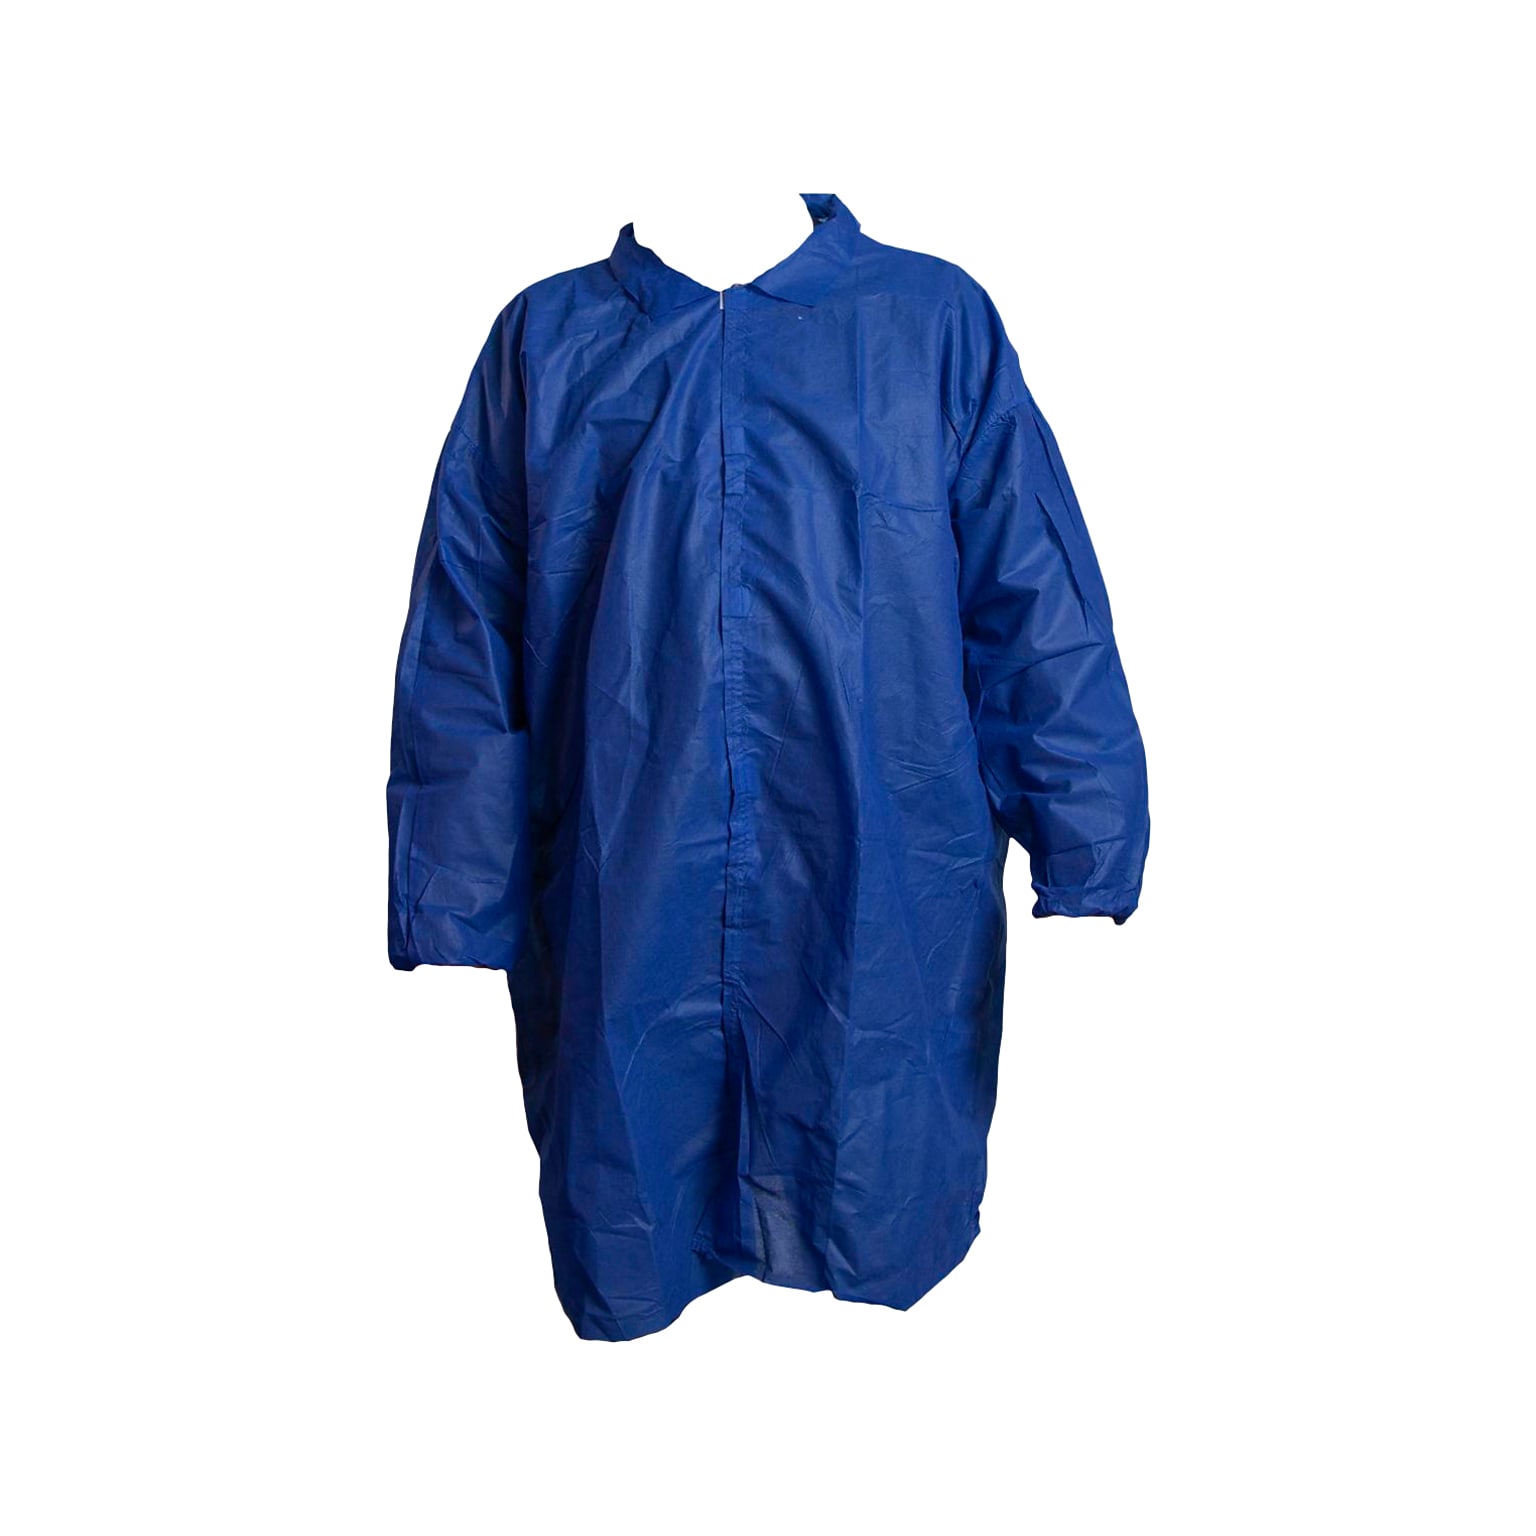 Unimed XL Lab Coat, Navy, 50/Carton (OLCN8971XL)